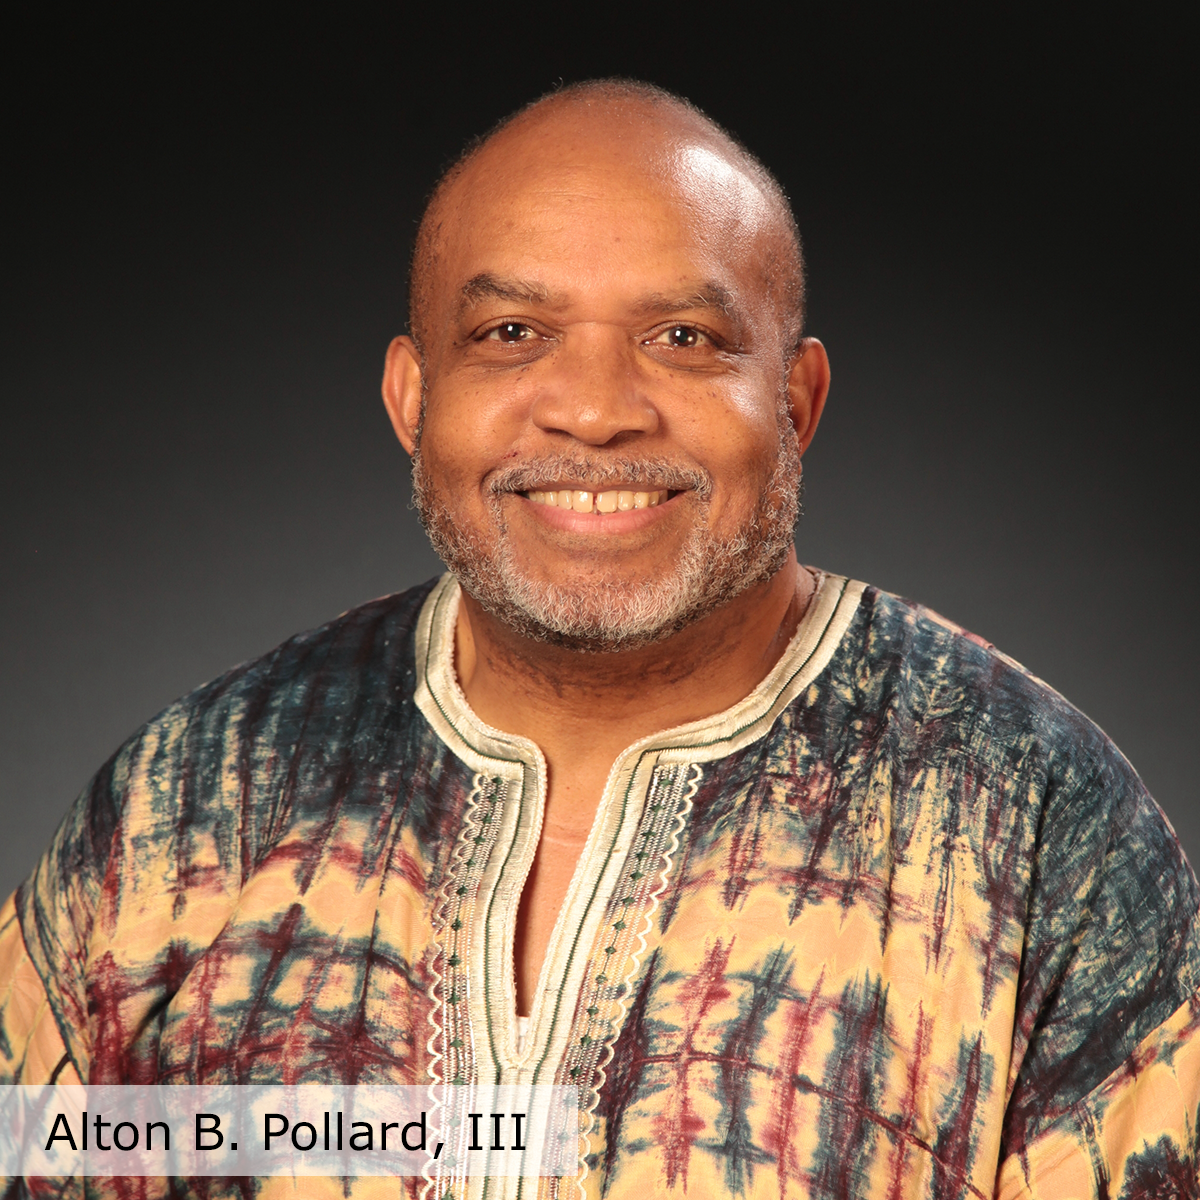 Alton B. Pollard, III